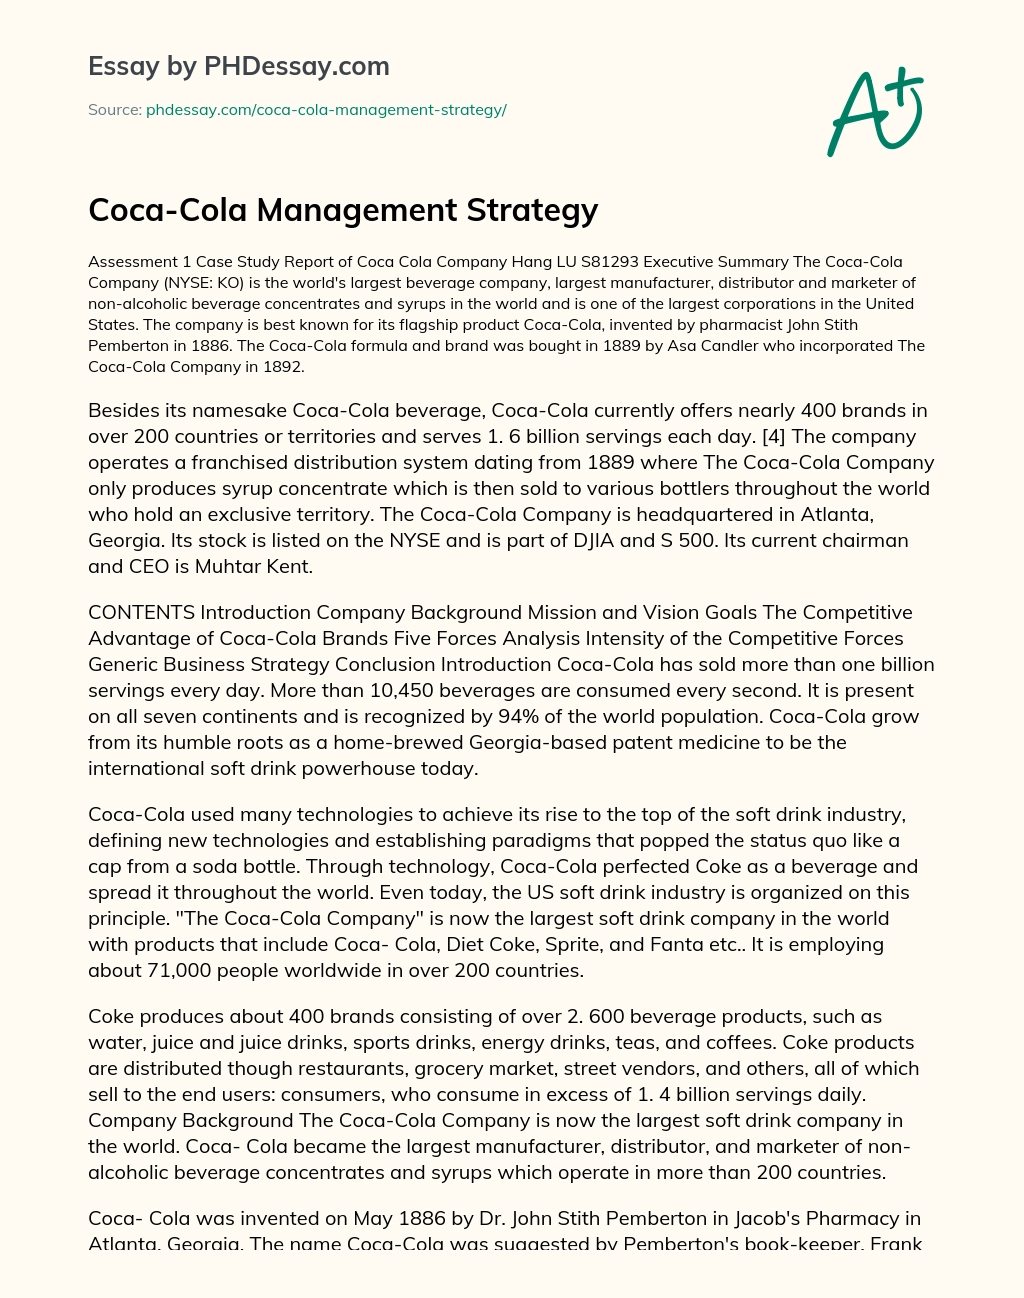 Coca-Cola Management Strategy essay